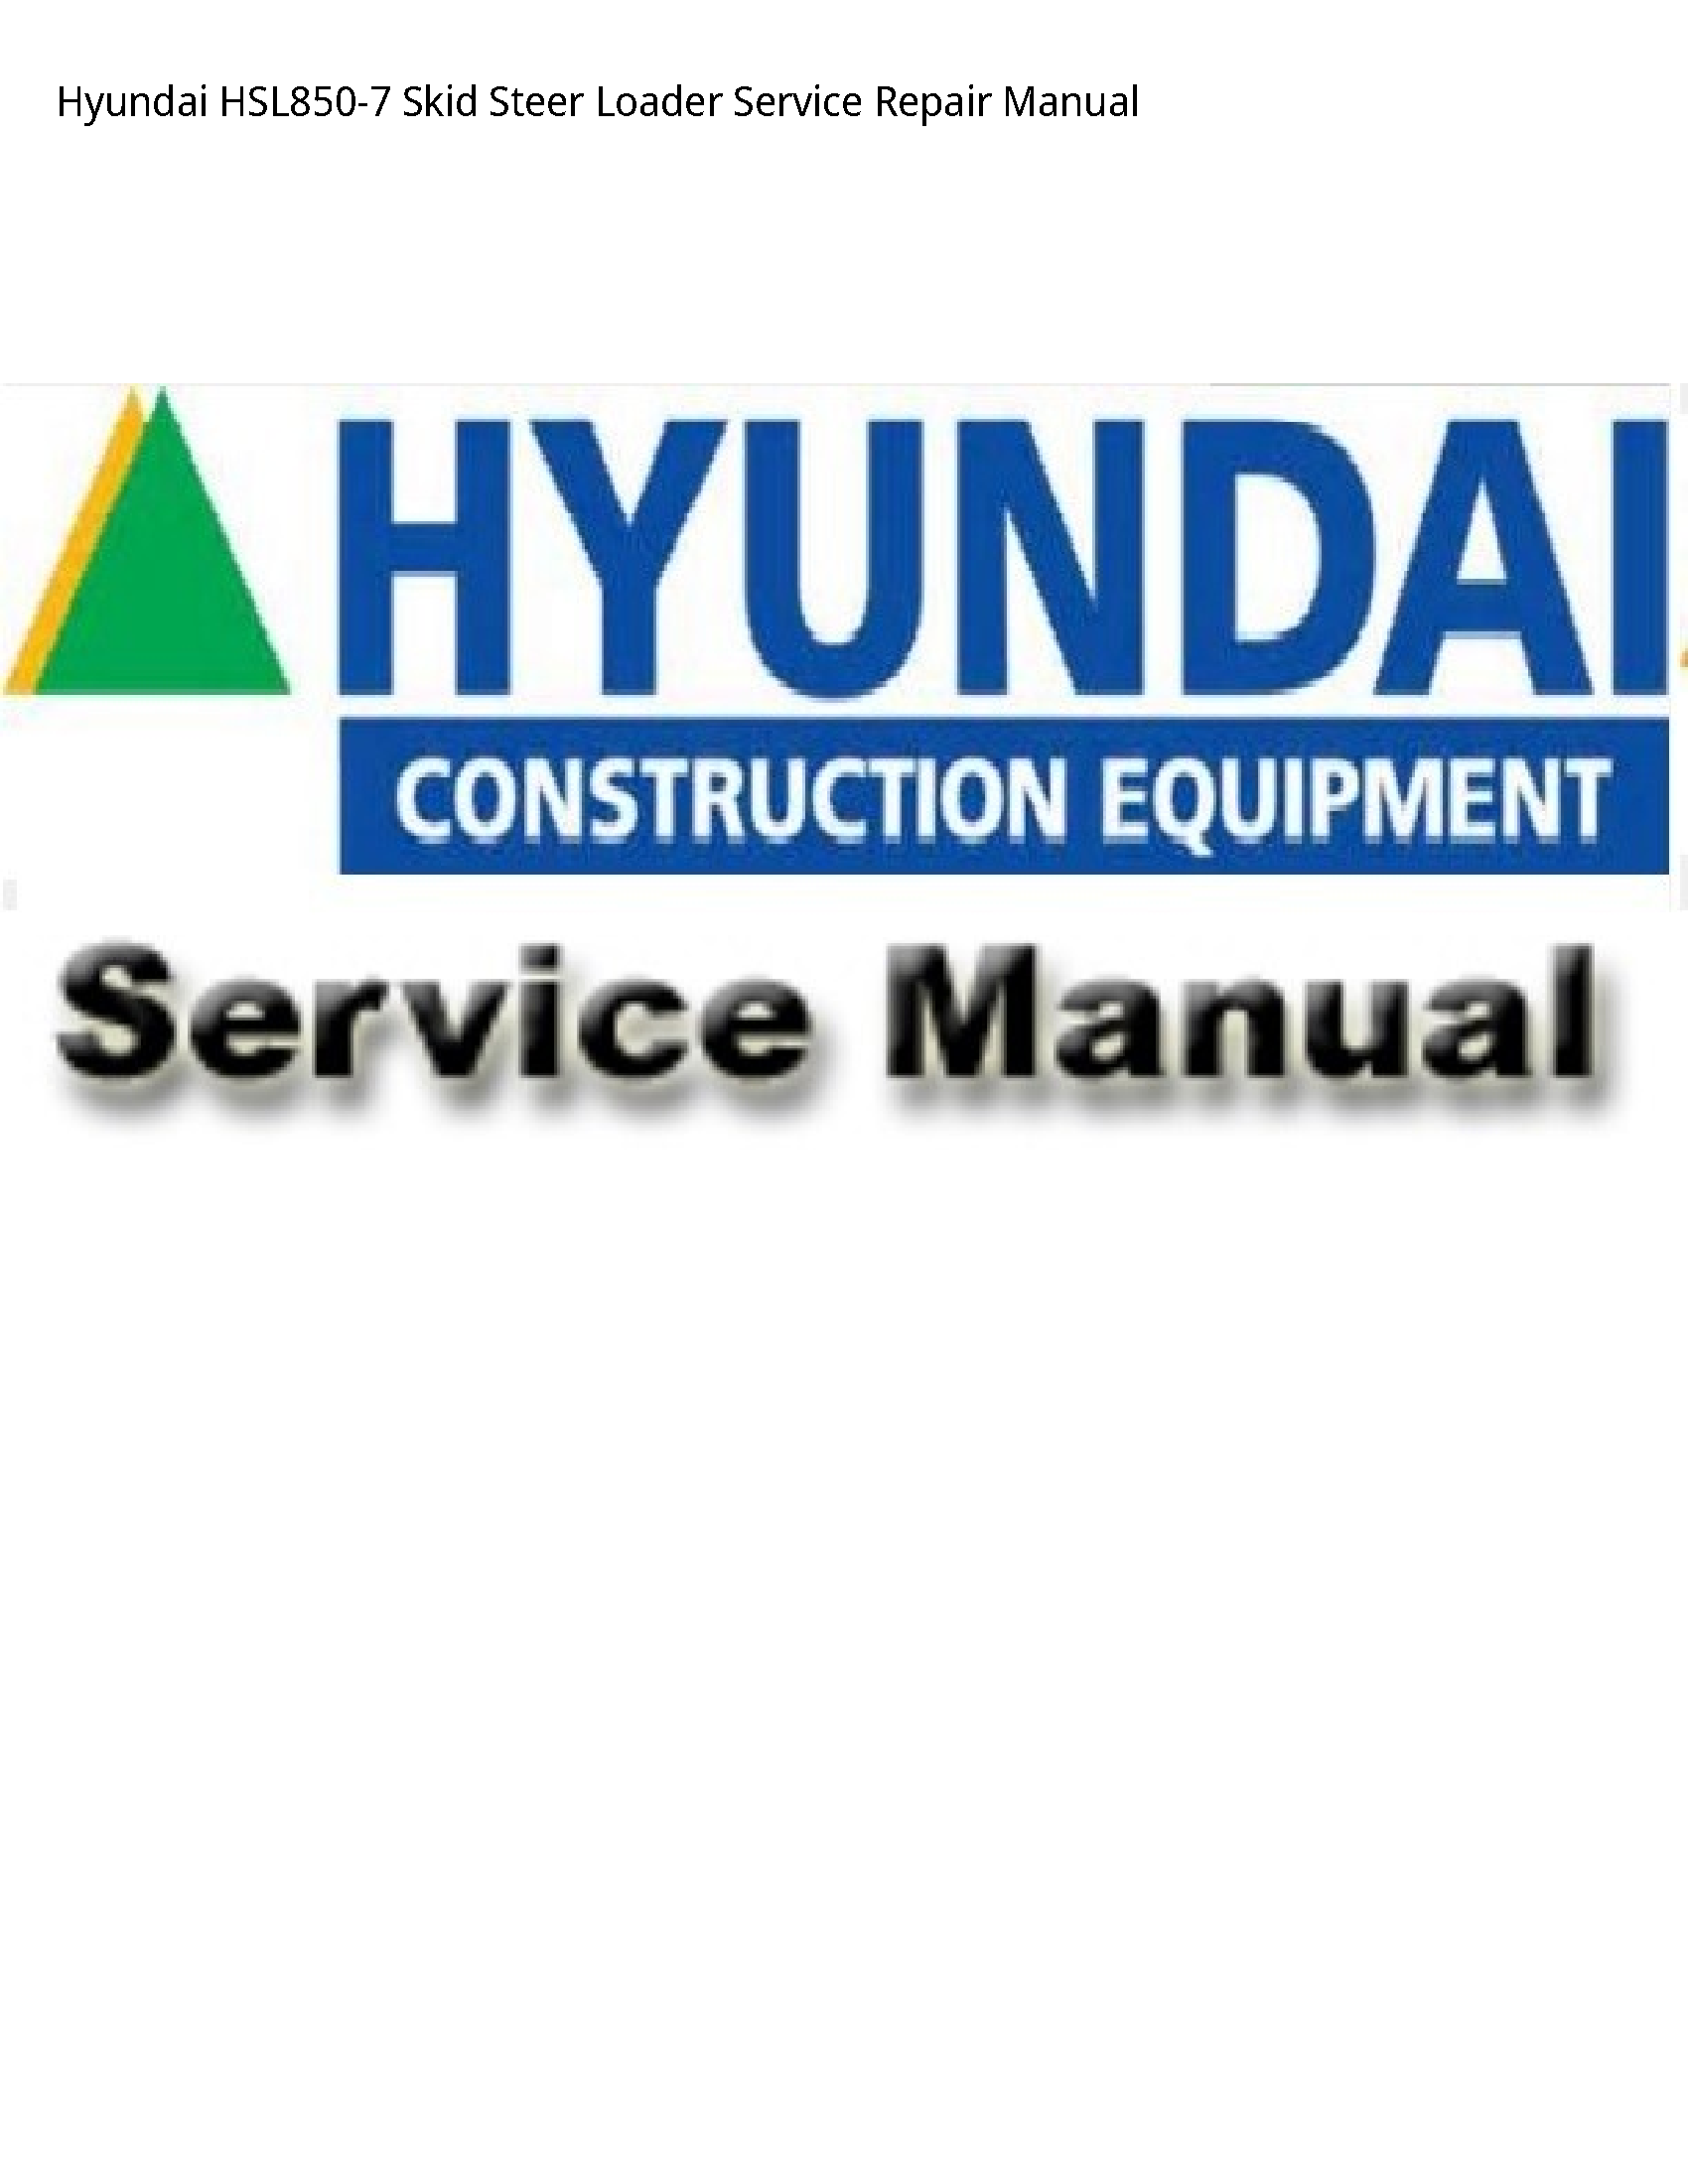 Hyundai HSL850-7 Skid Steer Loader manual